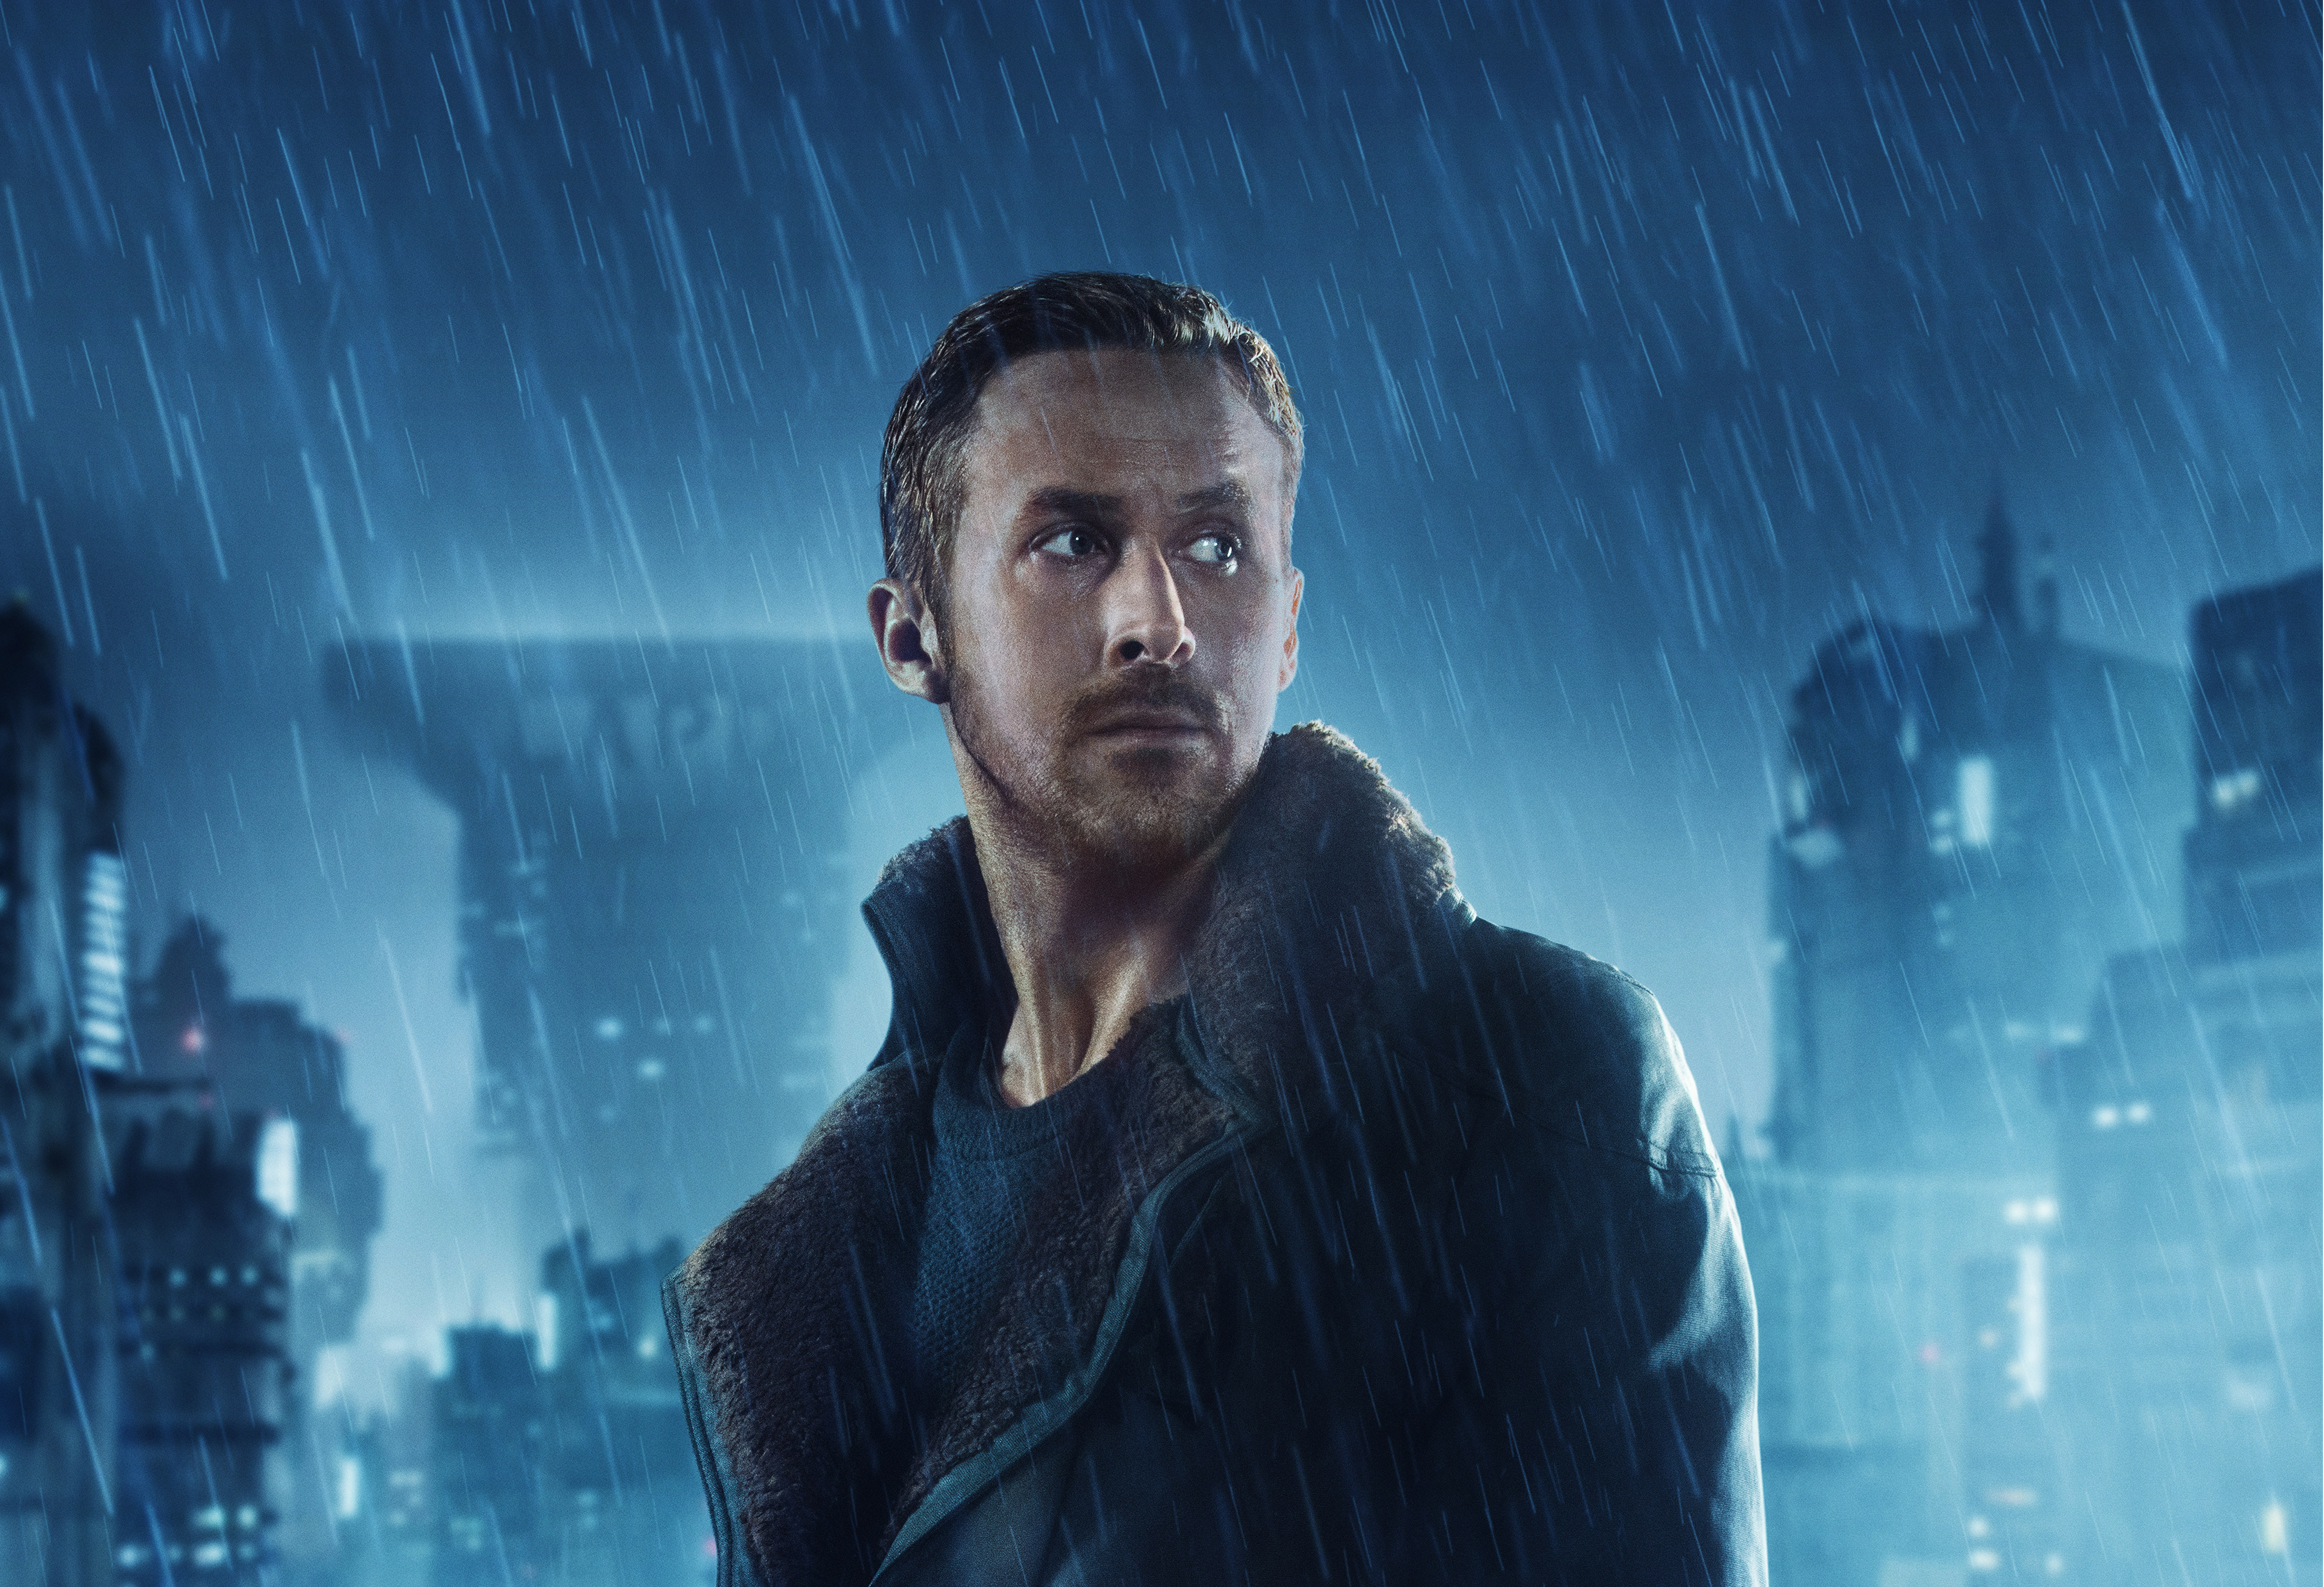 The Ryan Gosling Blade Runner 2049 Haircut 